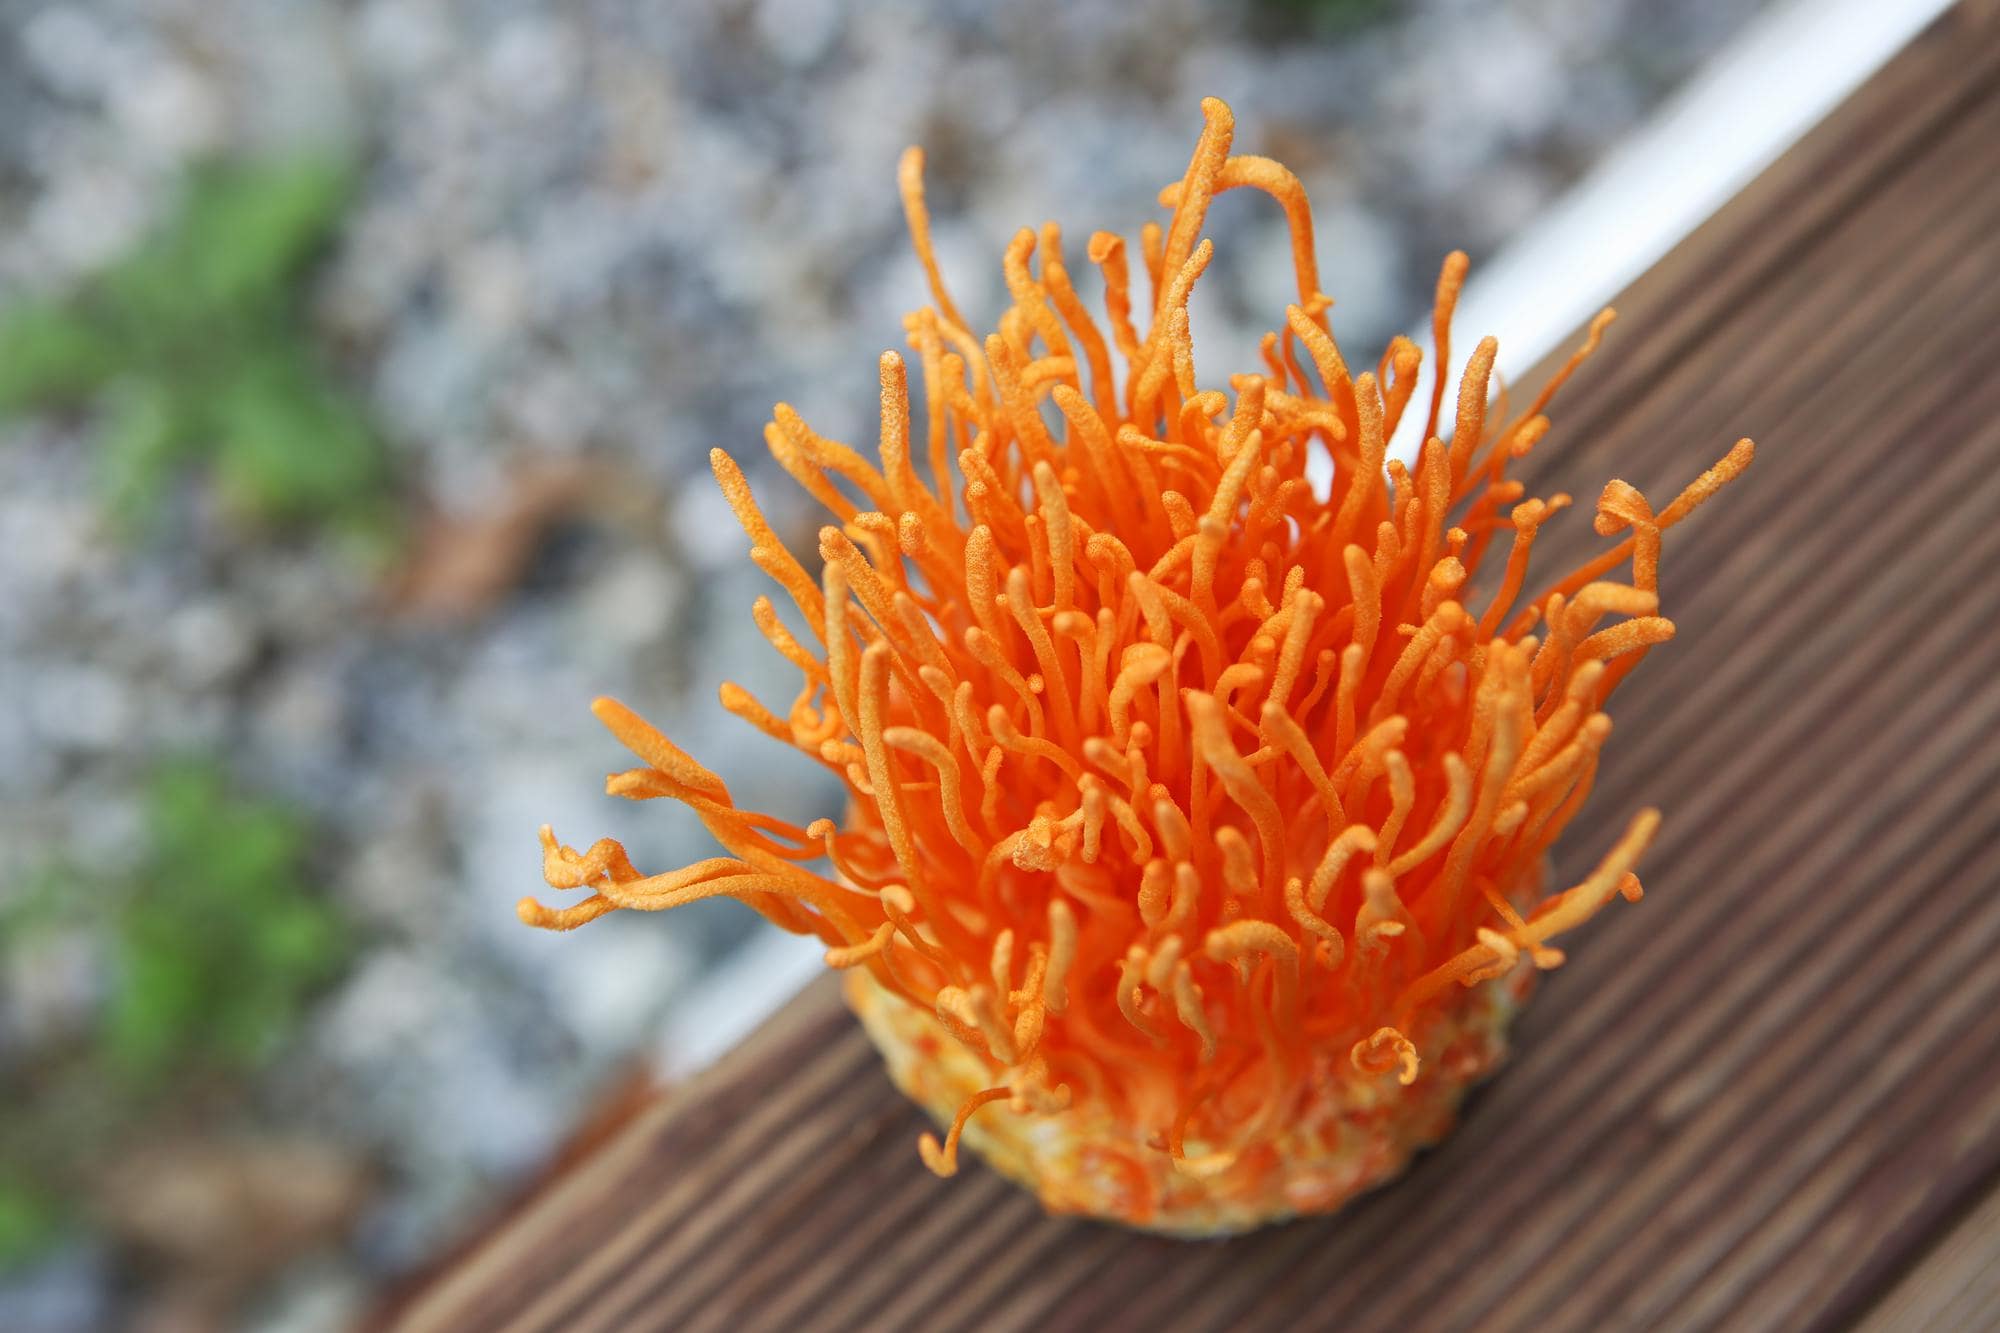 Royal Fungi: maak kennis met 5 bijzondere medicinale paddenstoelen